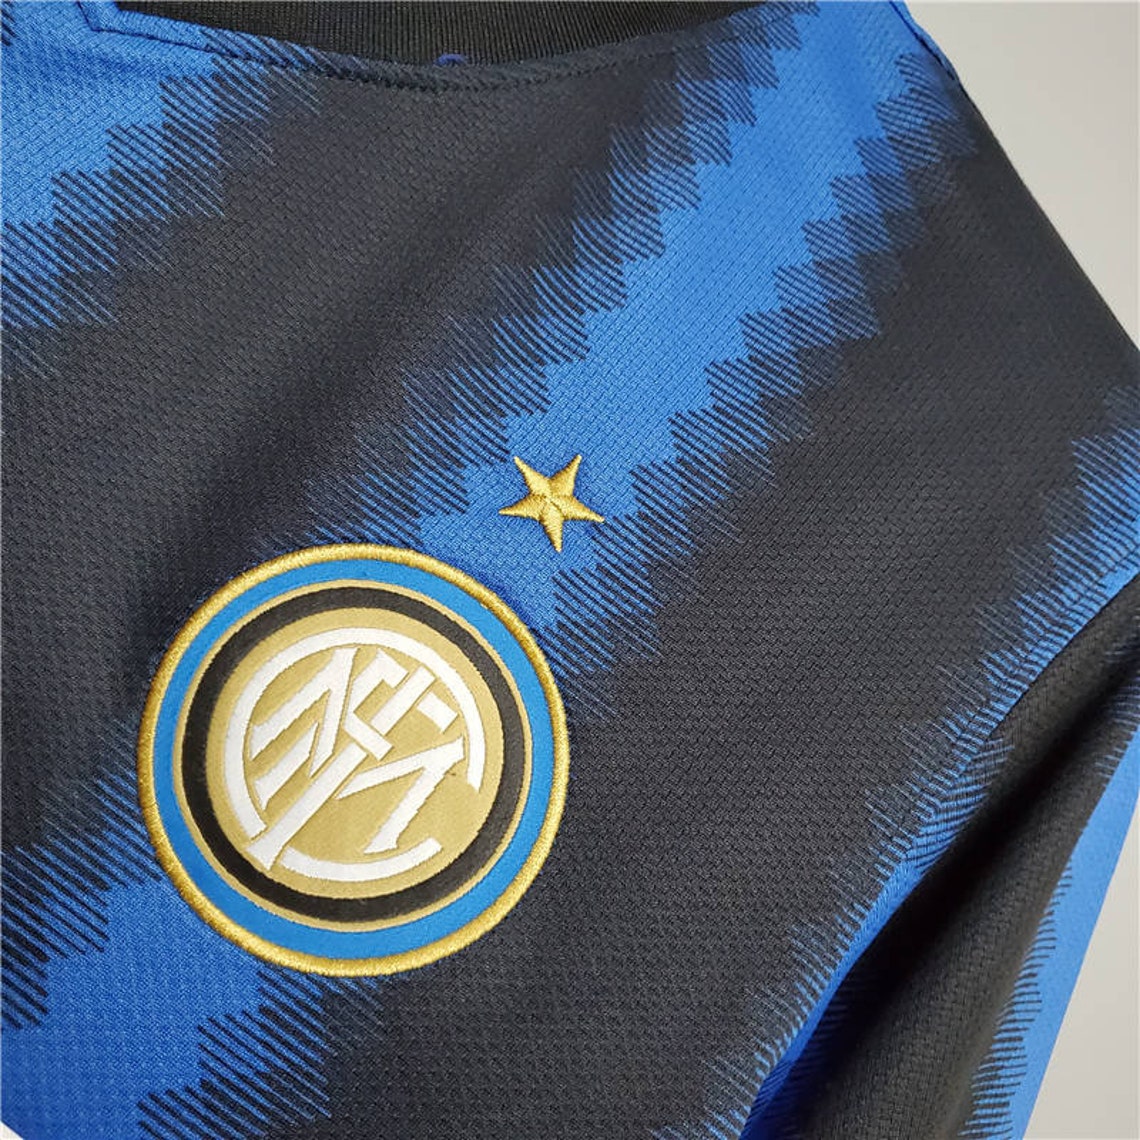 Inter Milan 2010/11 Home Retro football kit jersey | Etsy